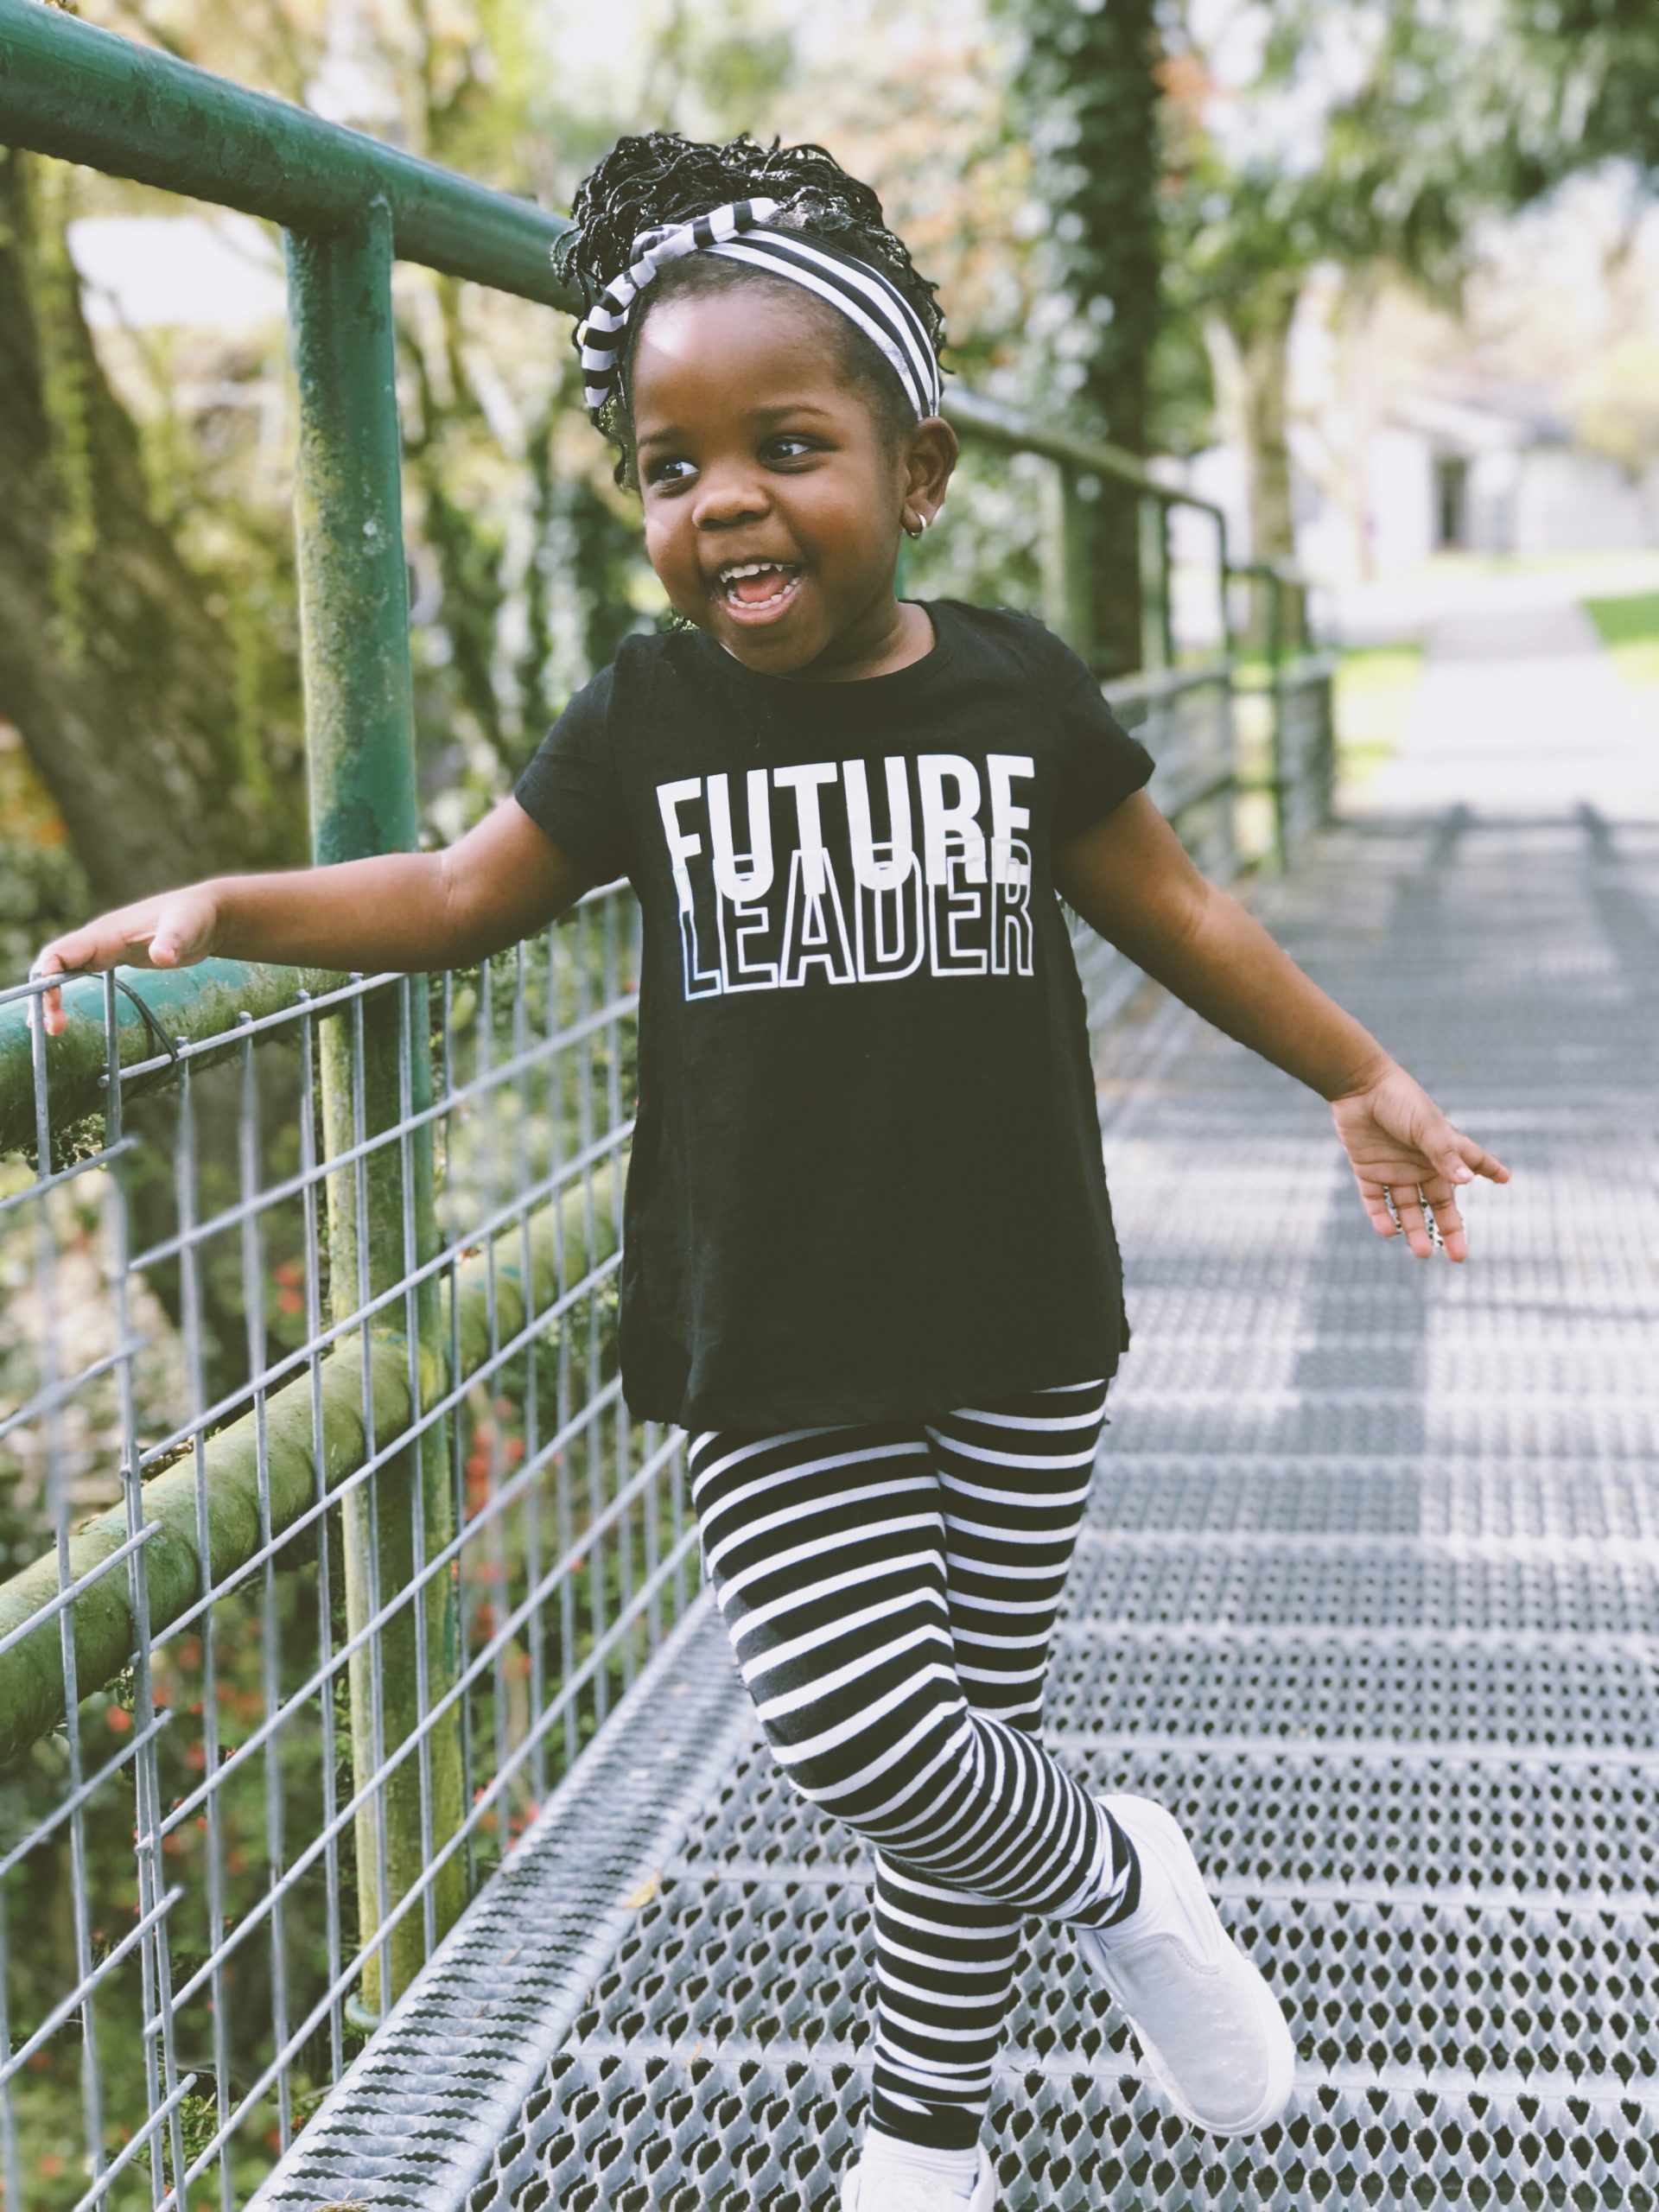 toddler on a bridget wearing a future leader shirt